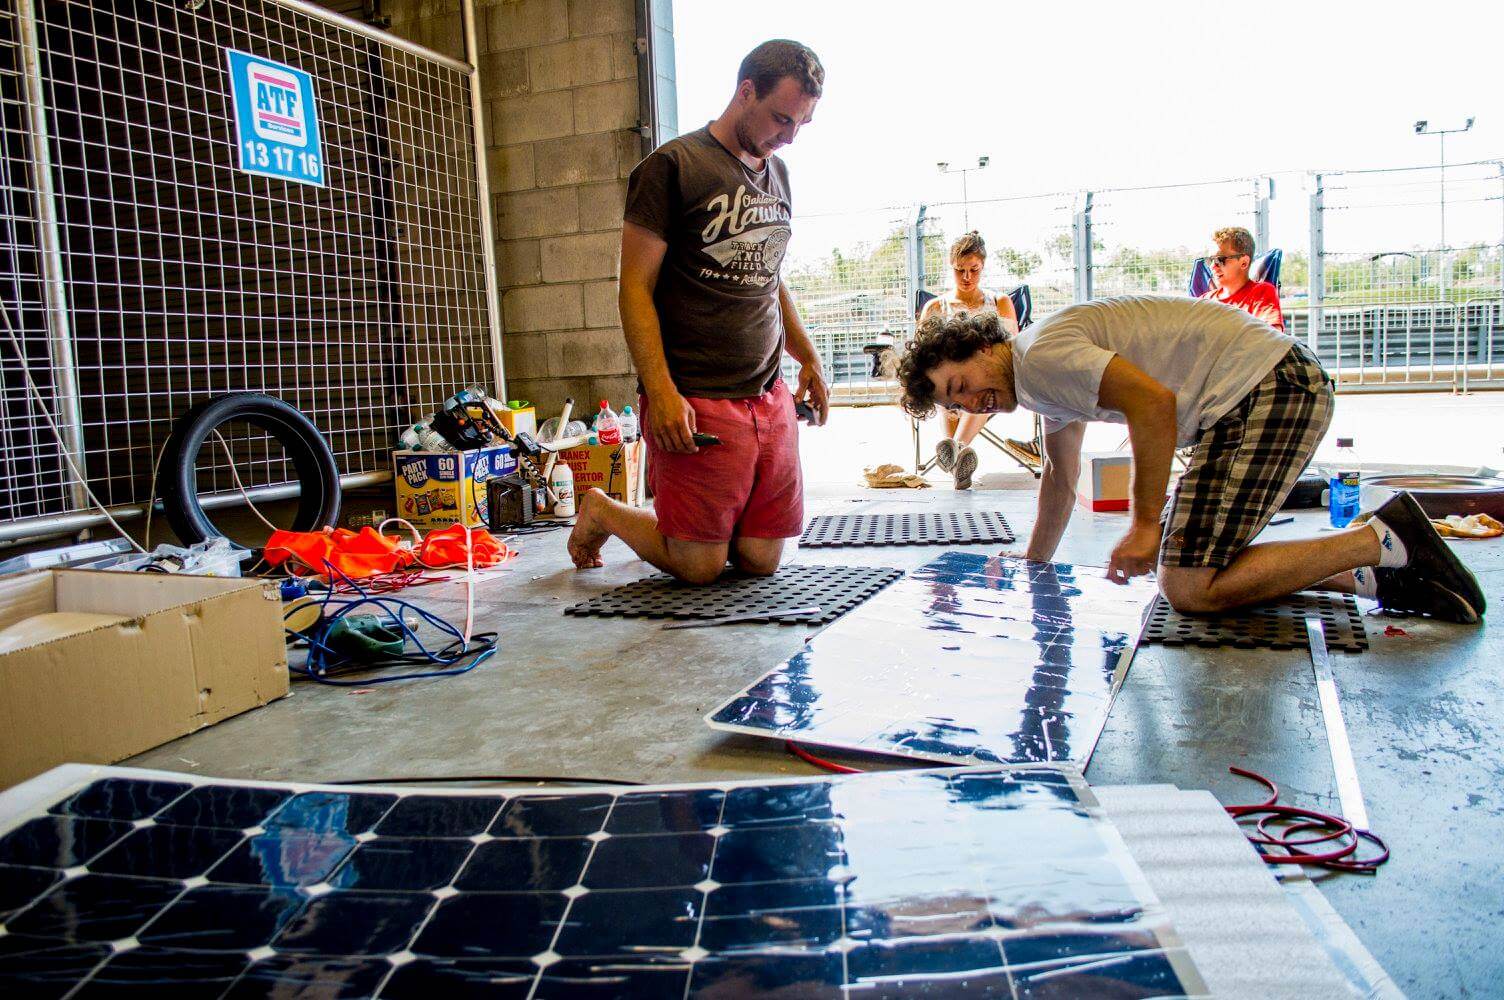 Installing flexible solar panels onto AURST world solar challenge entry